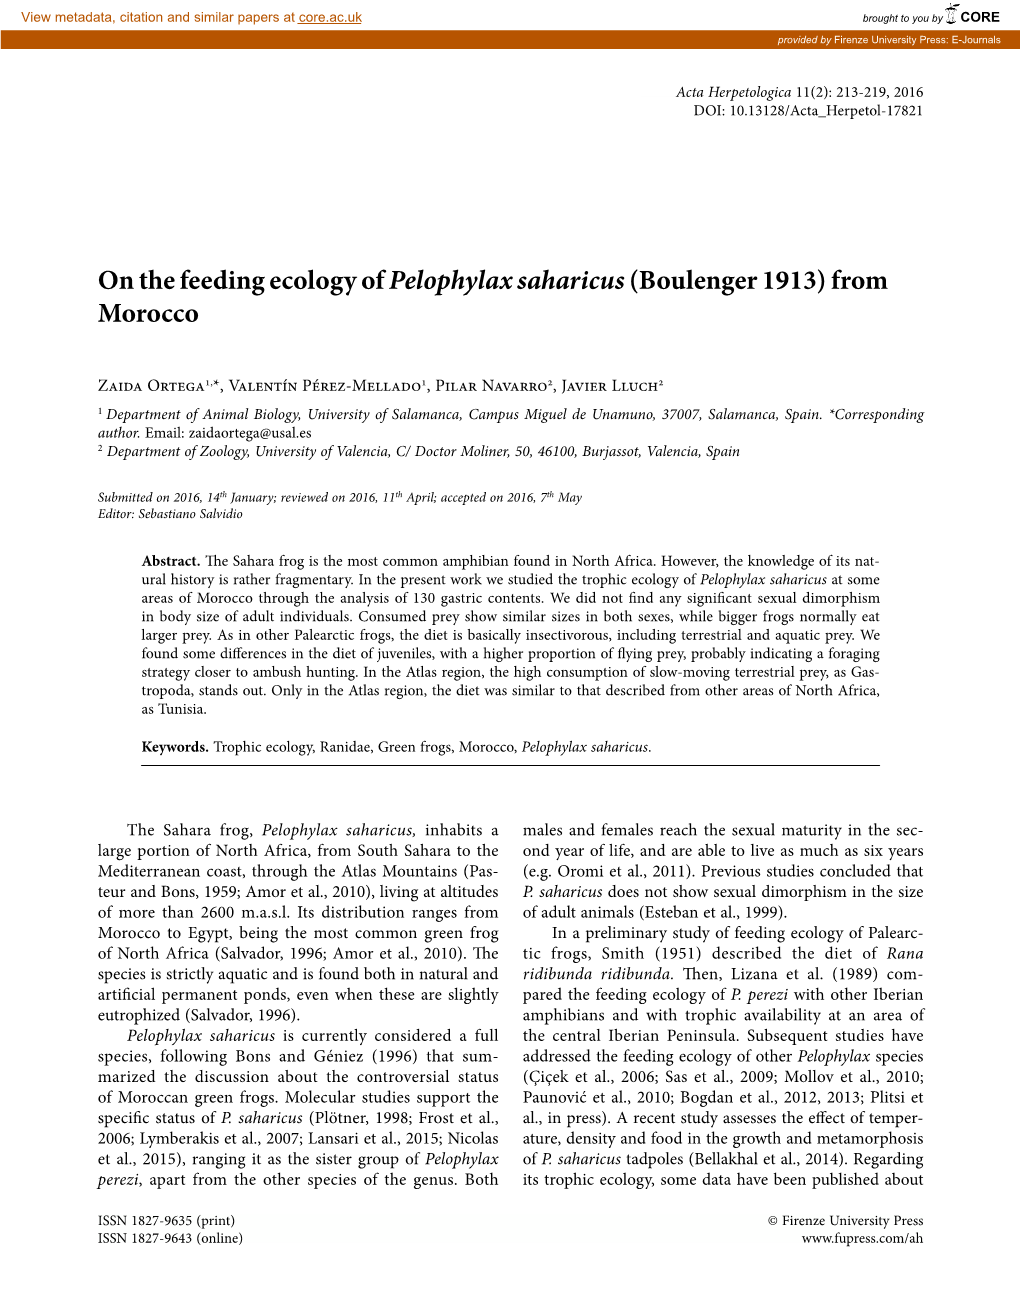 On the Feeding Ecology of Pelophylax Saharicus(Boulenger 1913)